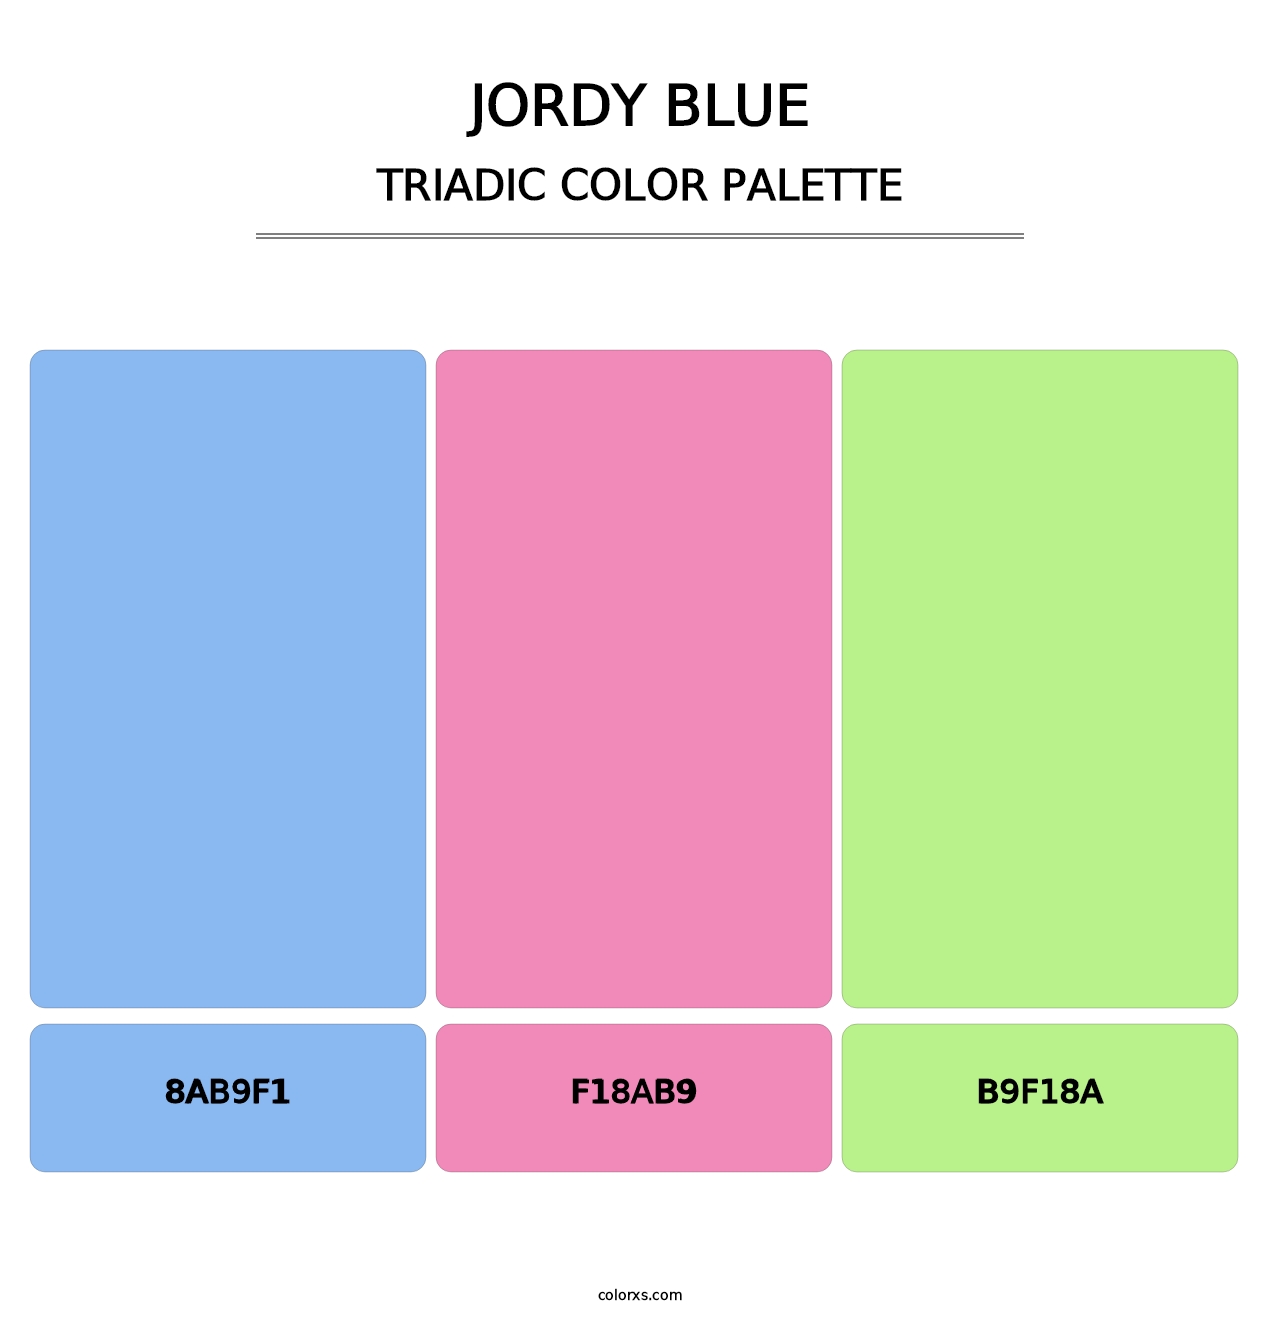 Jordy Blue - Triadic Color Palette